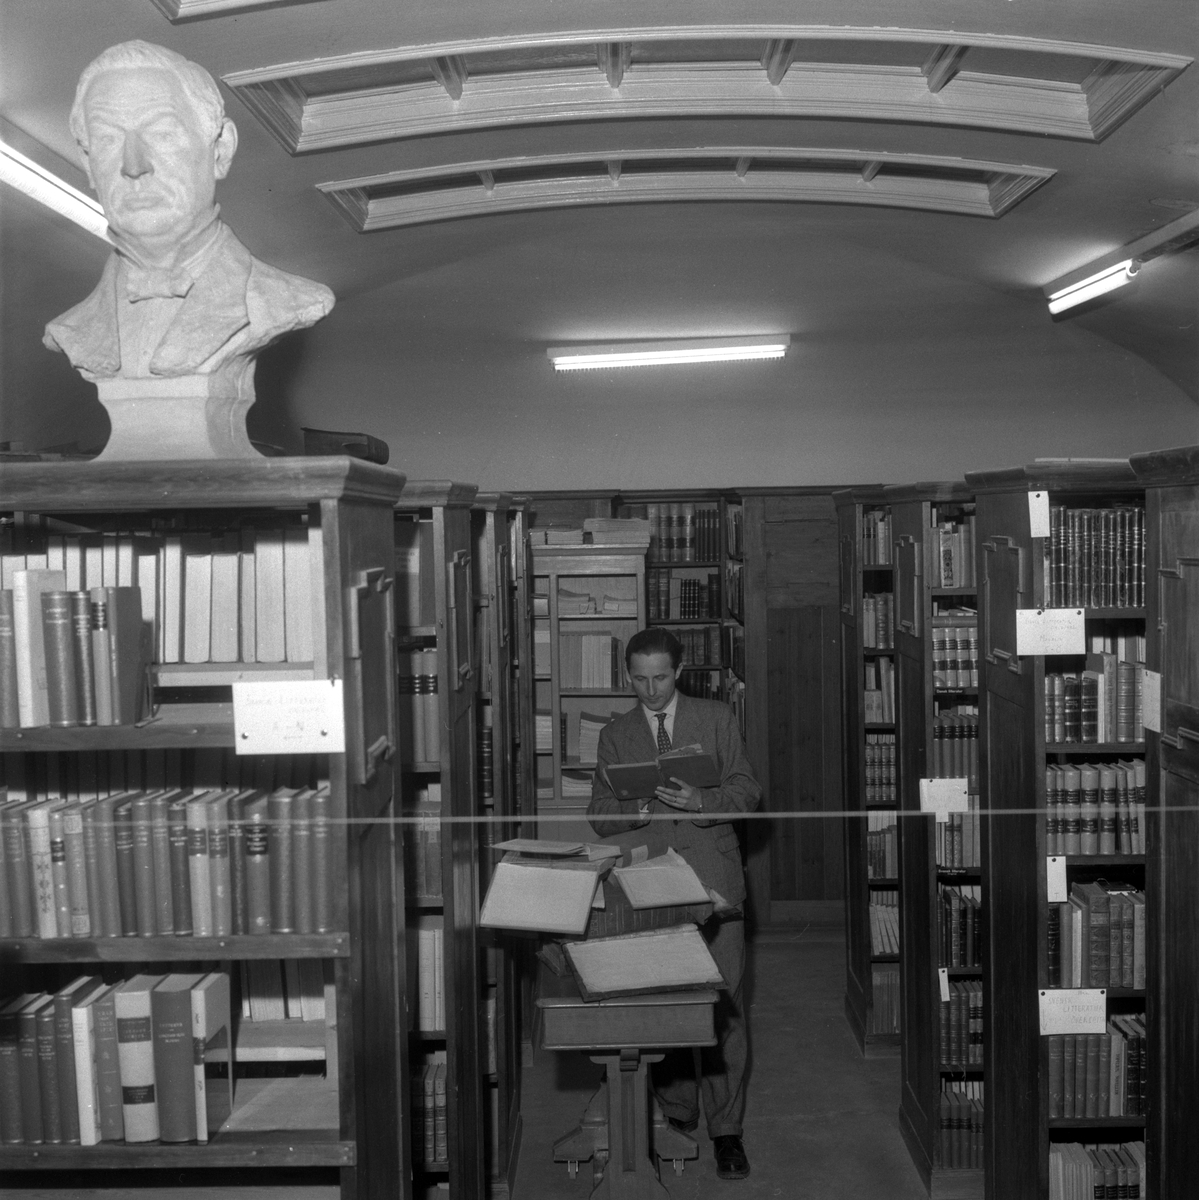 Karros bibliotek.
27 februari 1959.